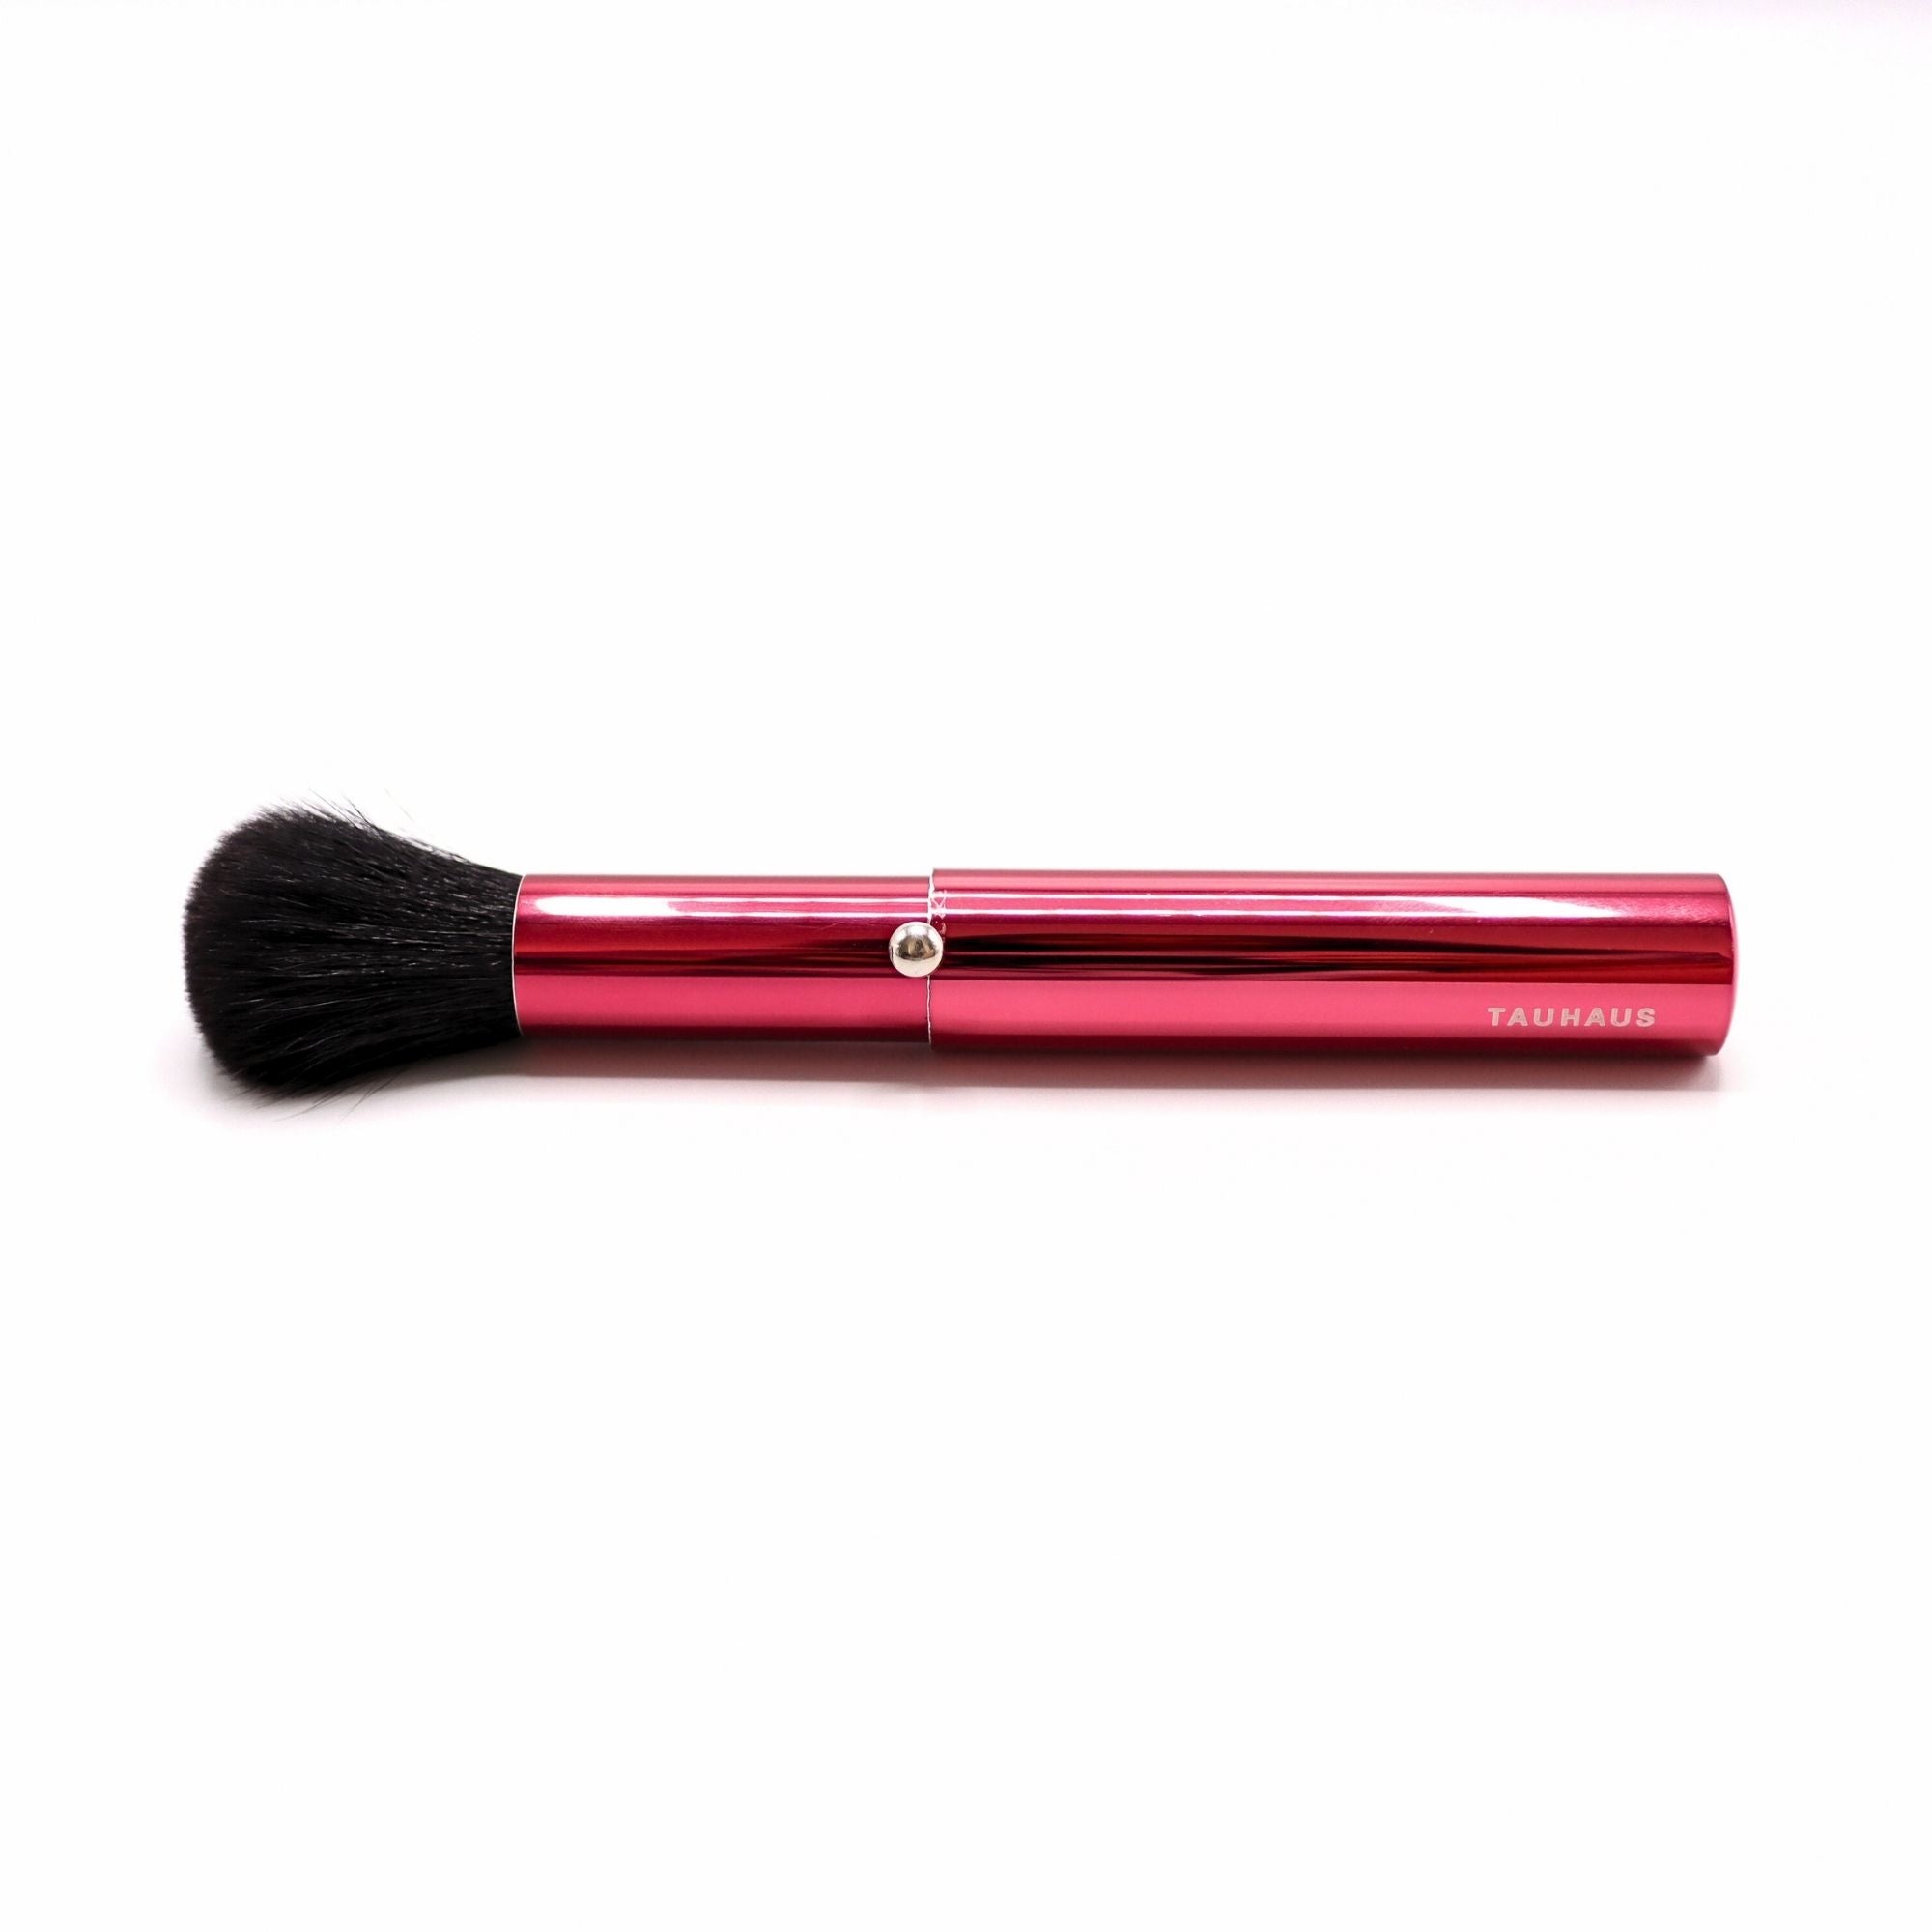 Tauhaus Portable Cheek Brush, Cherry Series (S-CCK20G) - Fude Beauty, Japanese Makeup Brushes